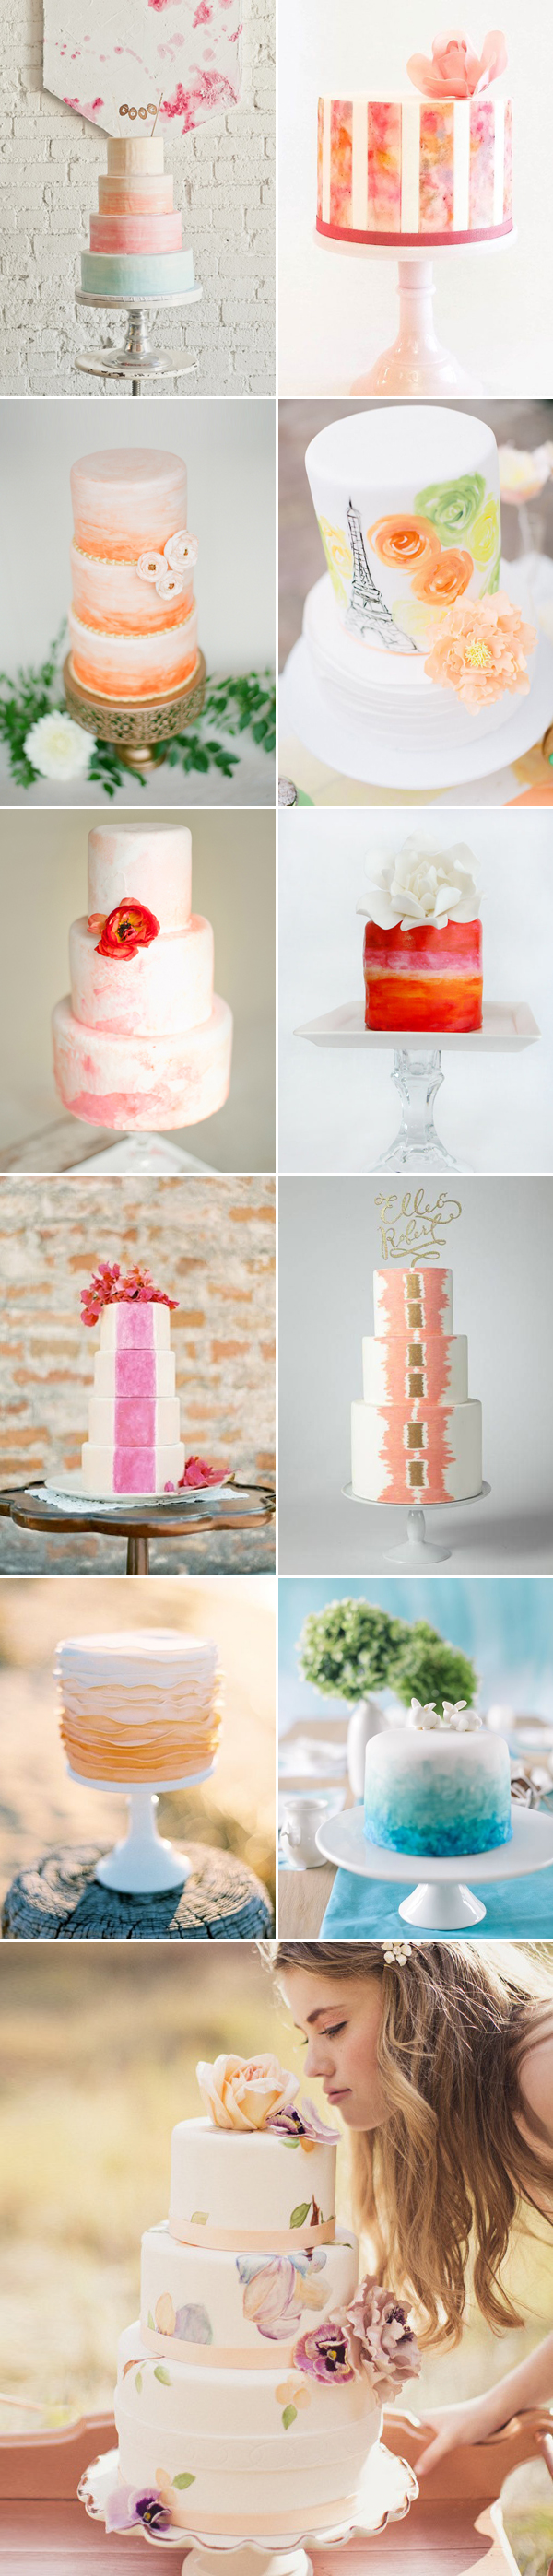 Unique Wedding Ideas - Passionate Watercolor Wedding Cakes